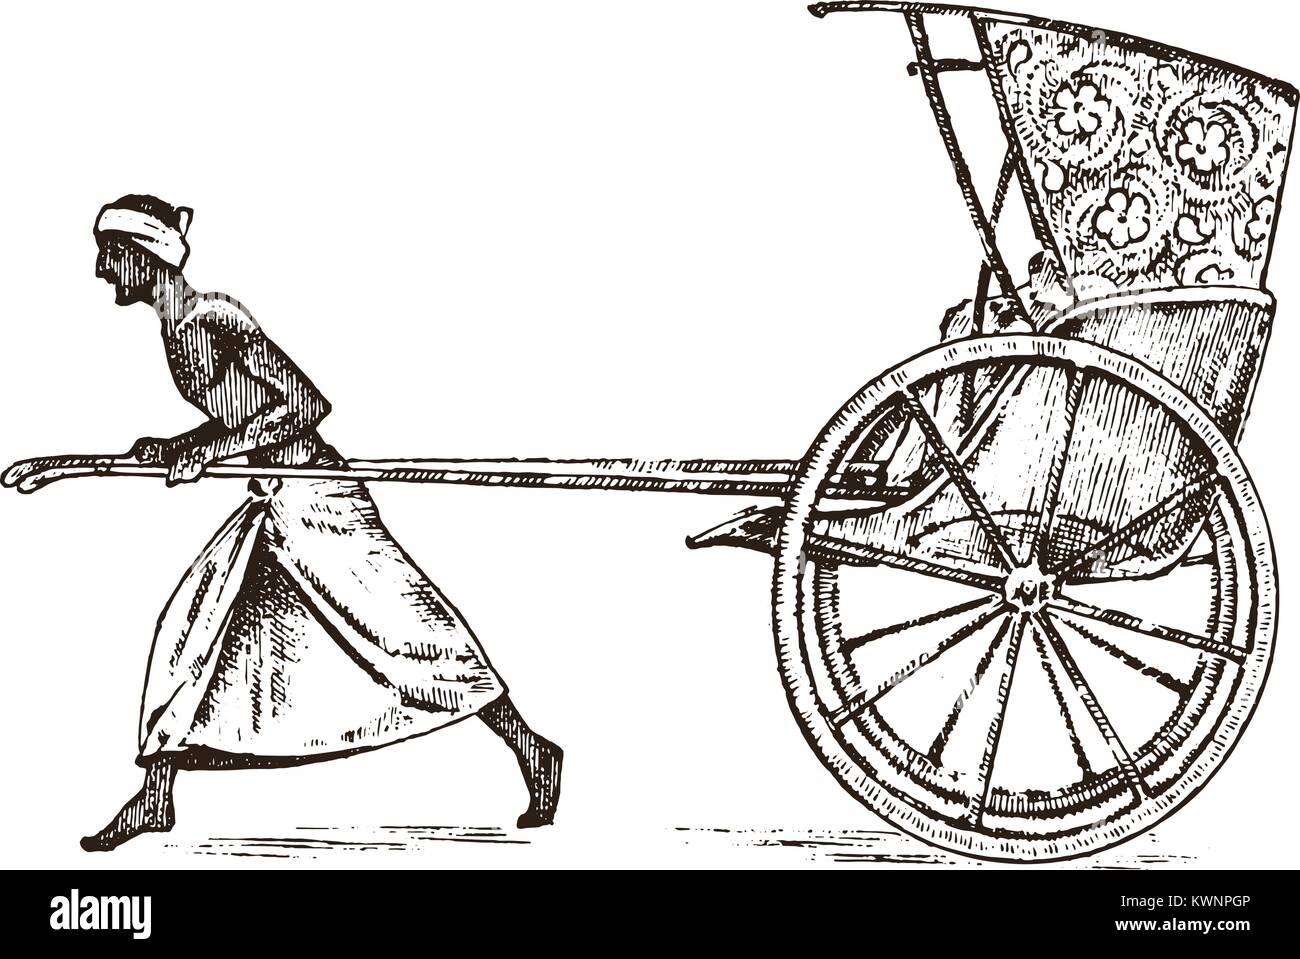 Indian Auto Rickshaw Sketch Digital Art by Danaan Andrew  Pixels